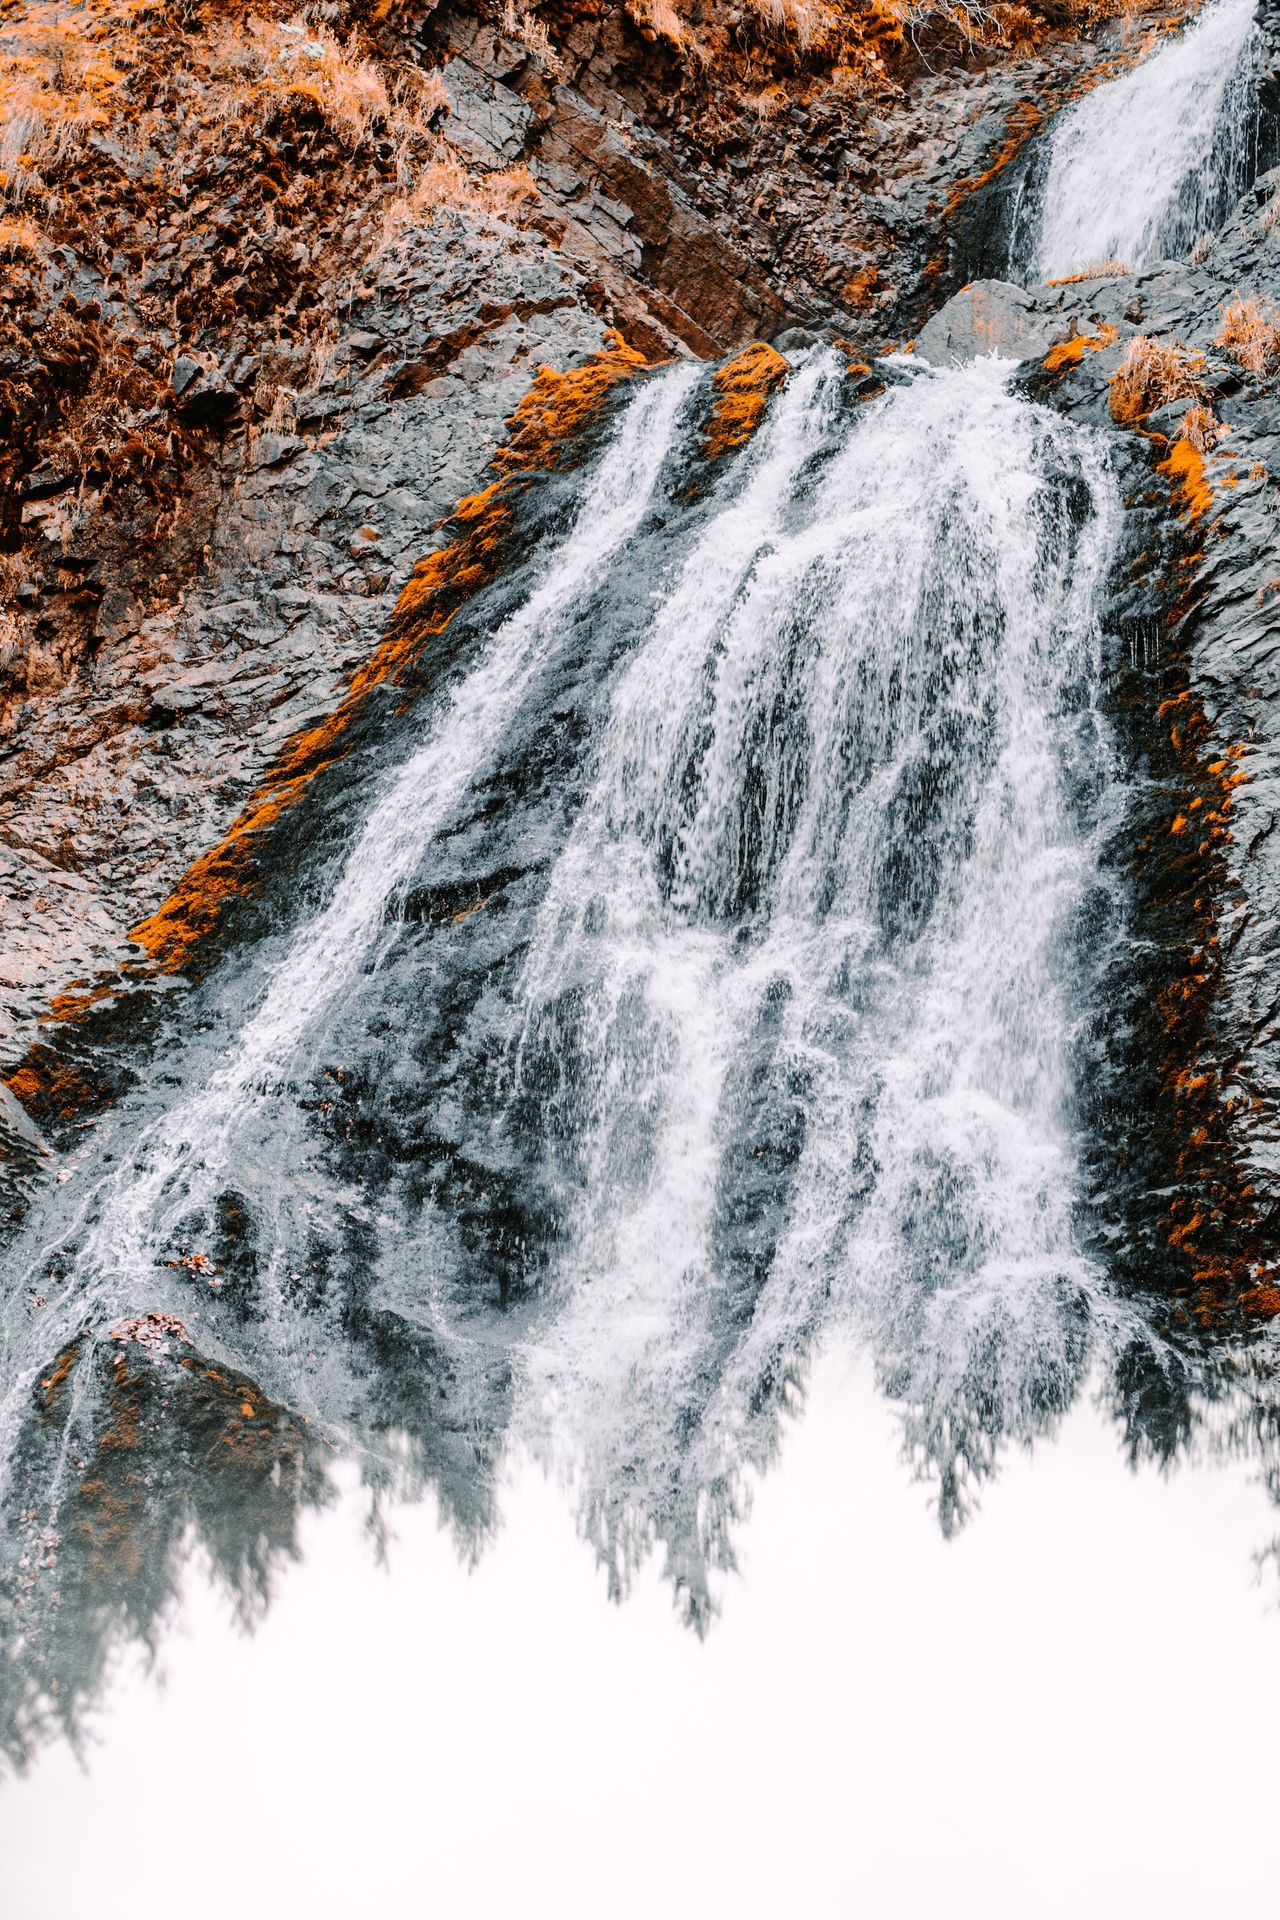 Bride's Veil Waterfall in Apuseni National Park